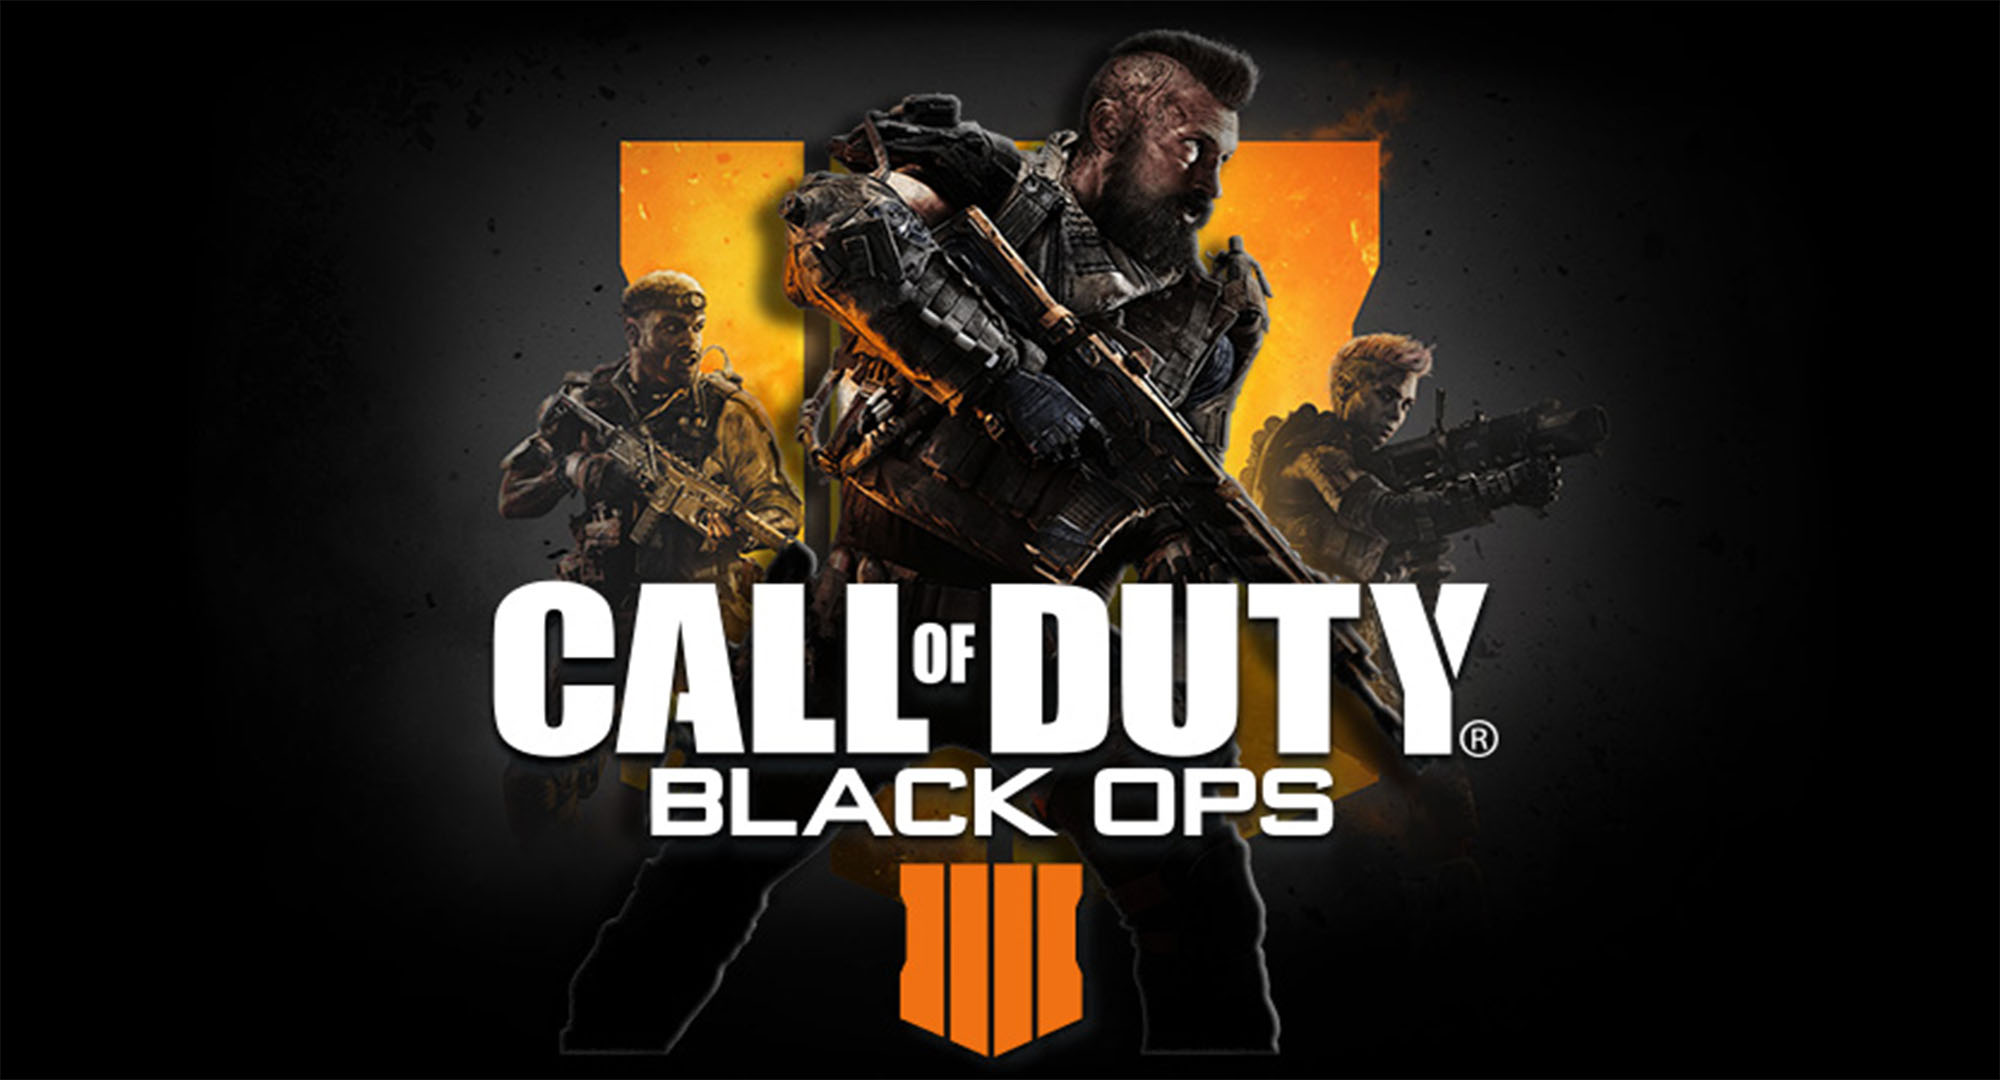 Call of Duty : Black Ops IIII